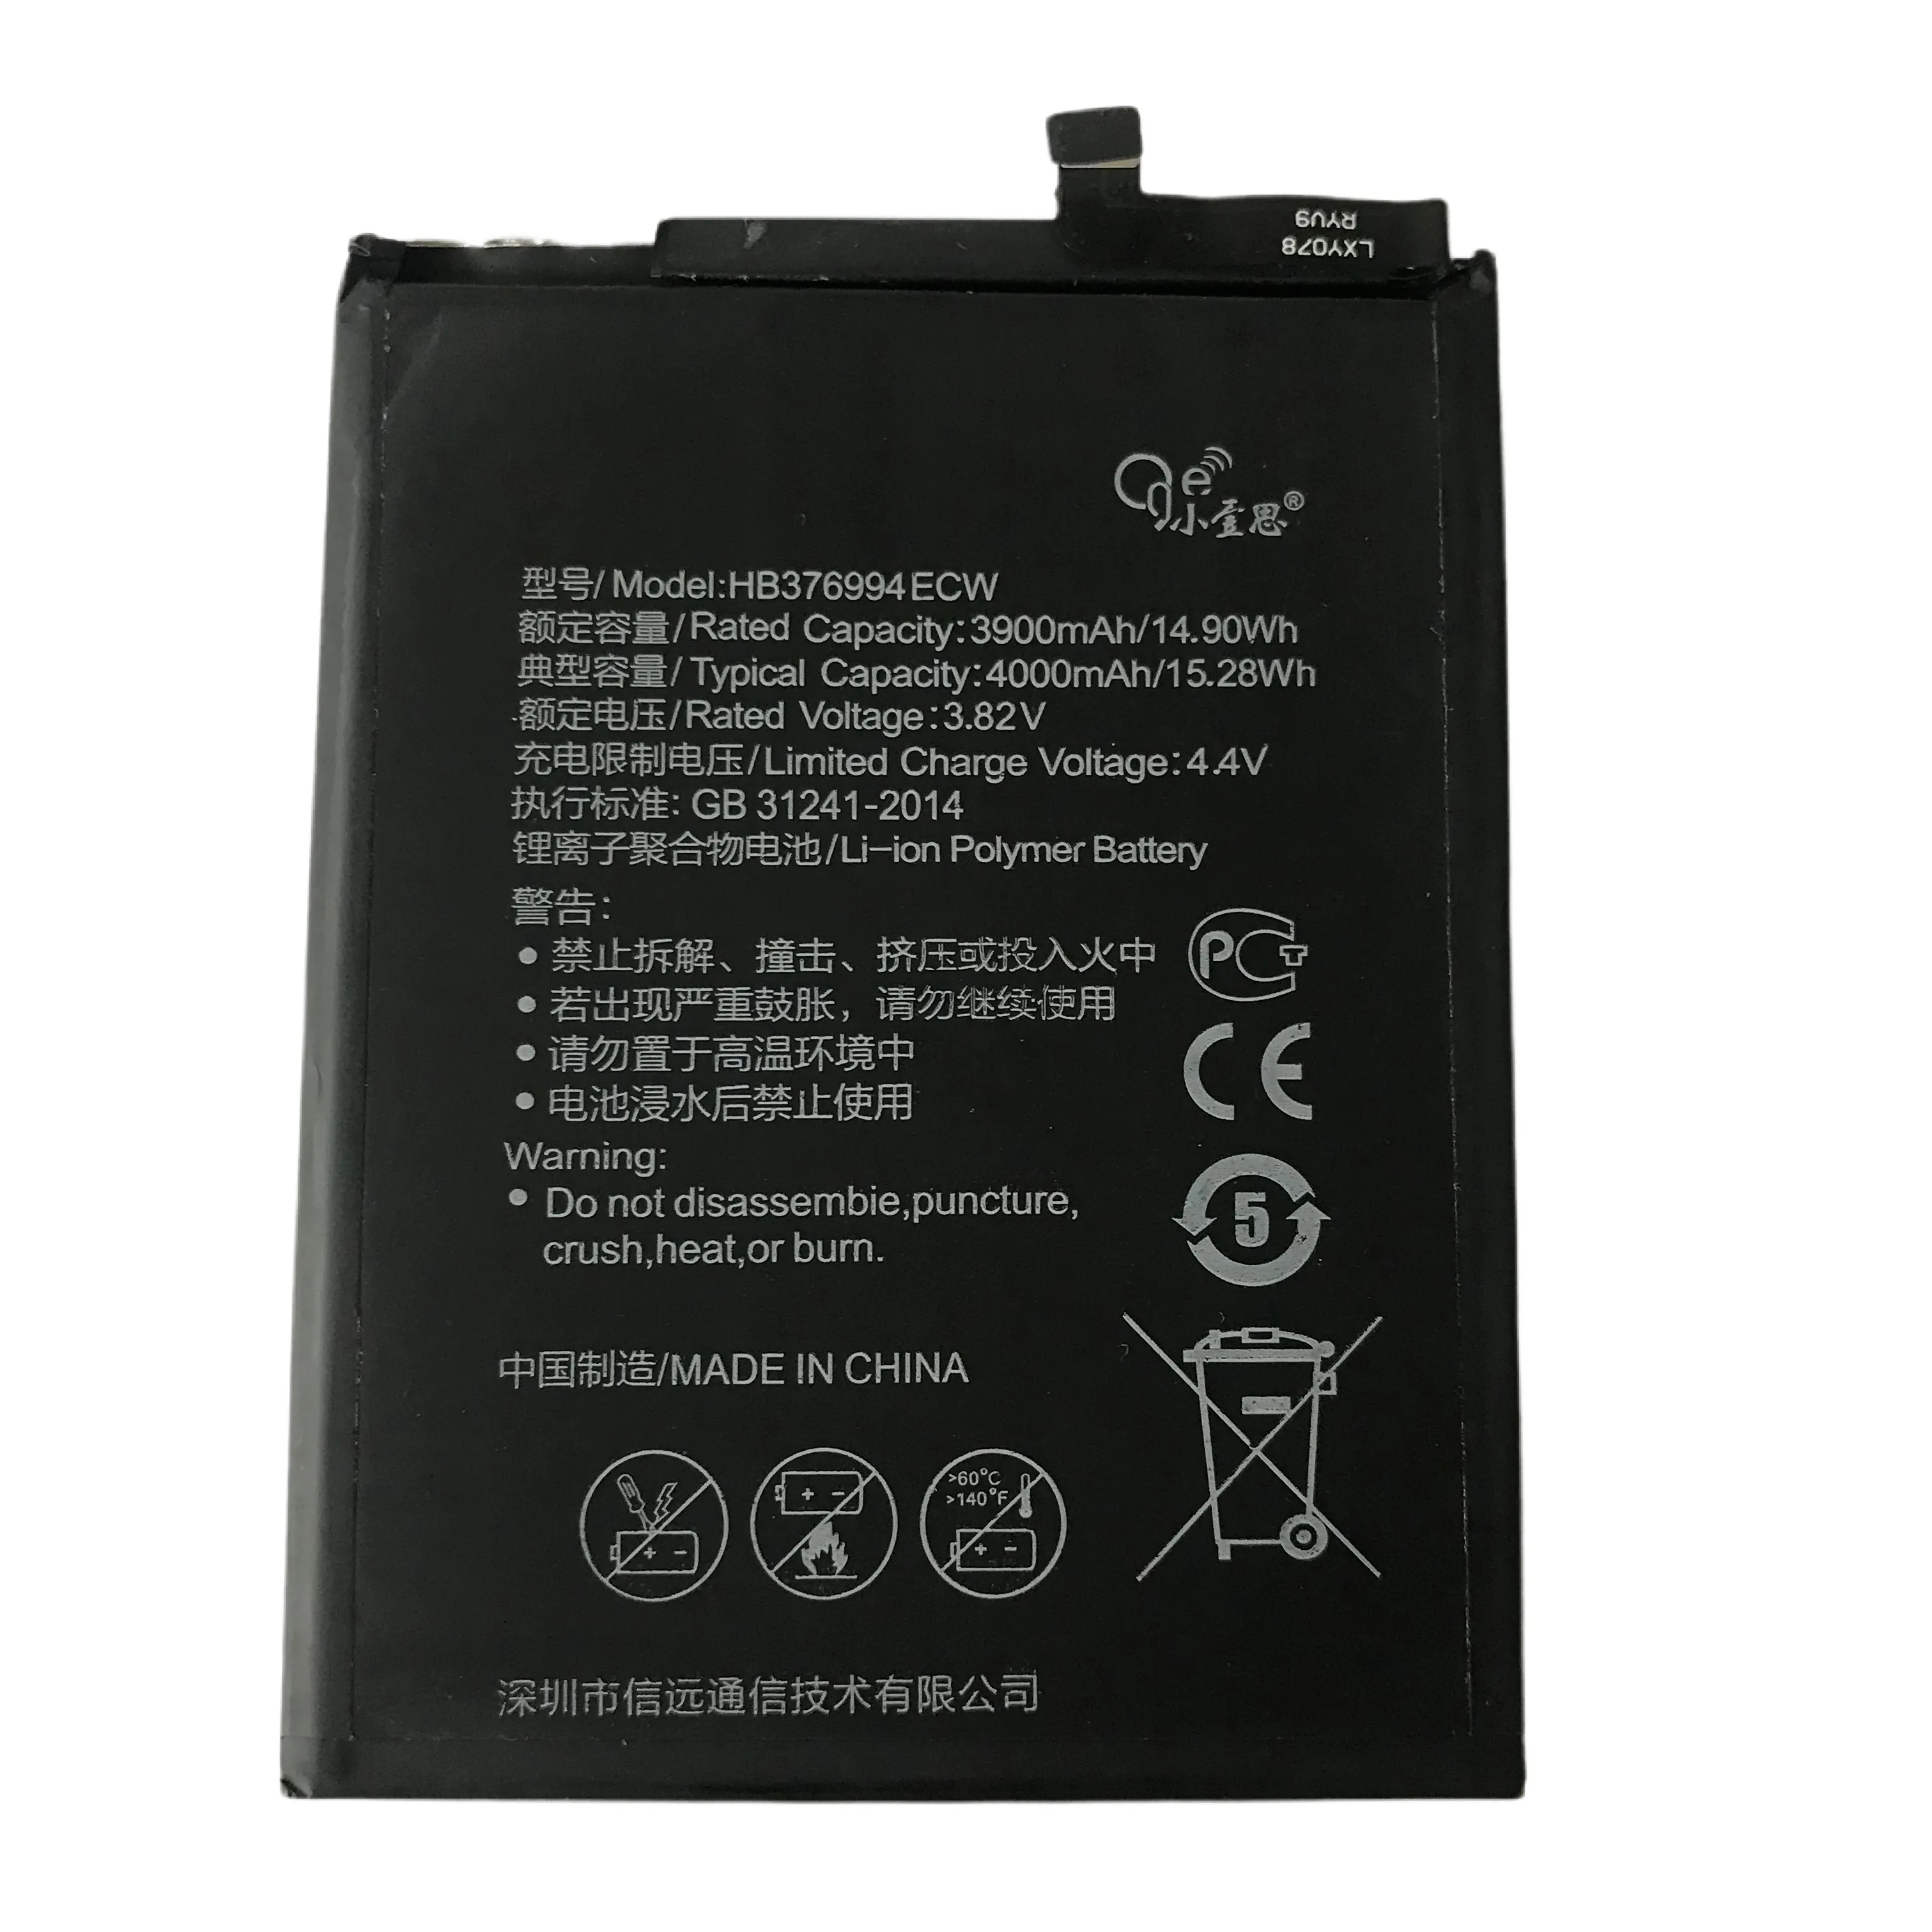 Batería de polímero de iones de litio HB376994ECW, Original, para Huawei Honor 8 Pro Honor V9 DUK-AL20 DUK-TL30